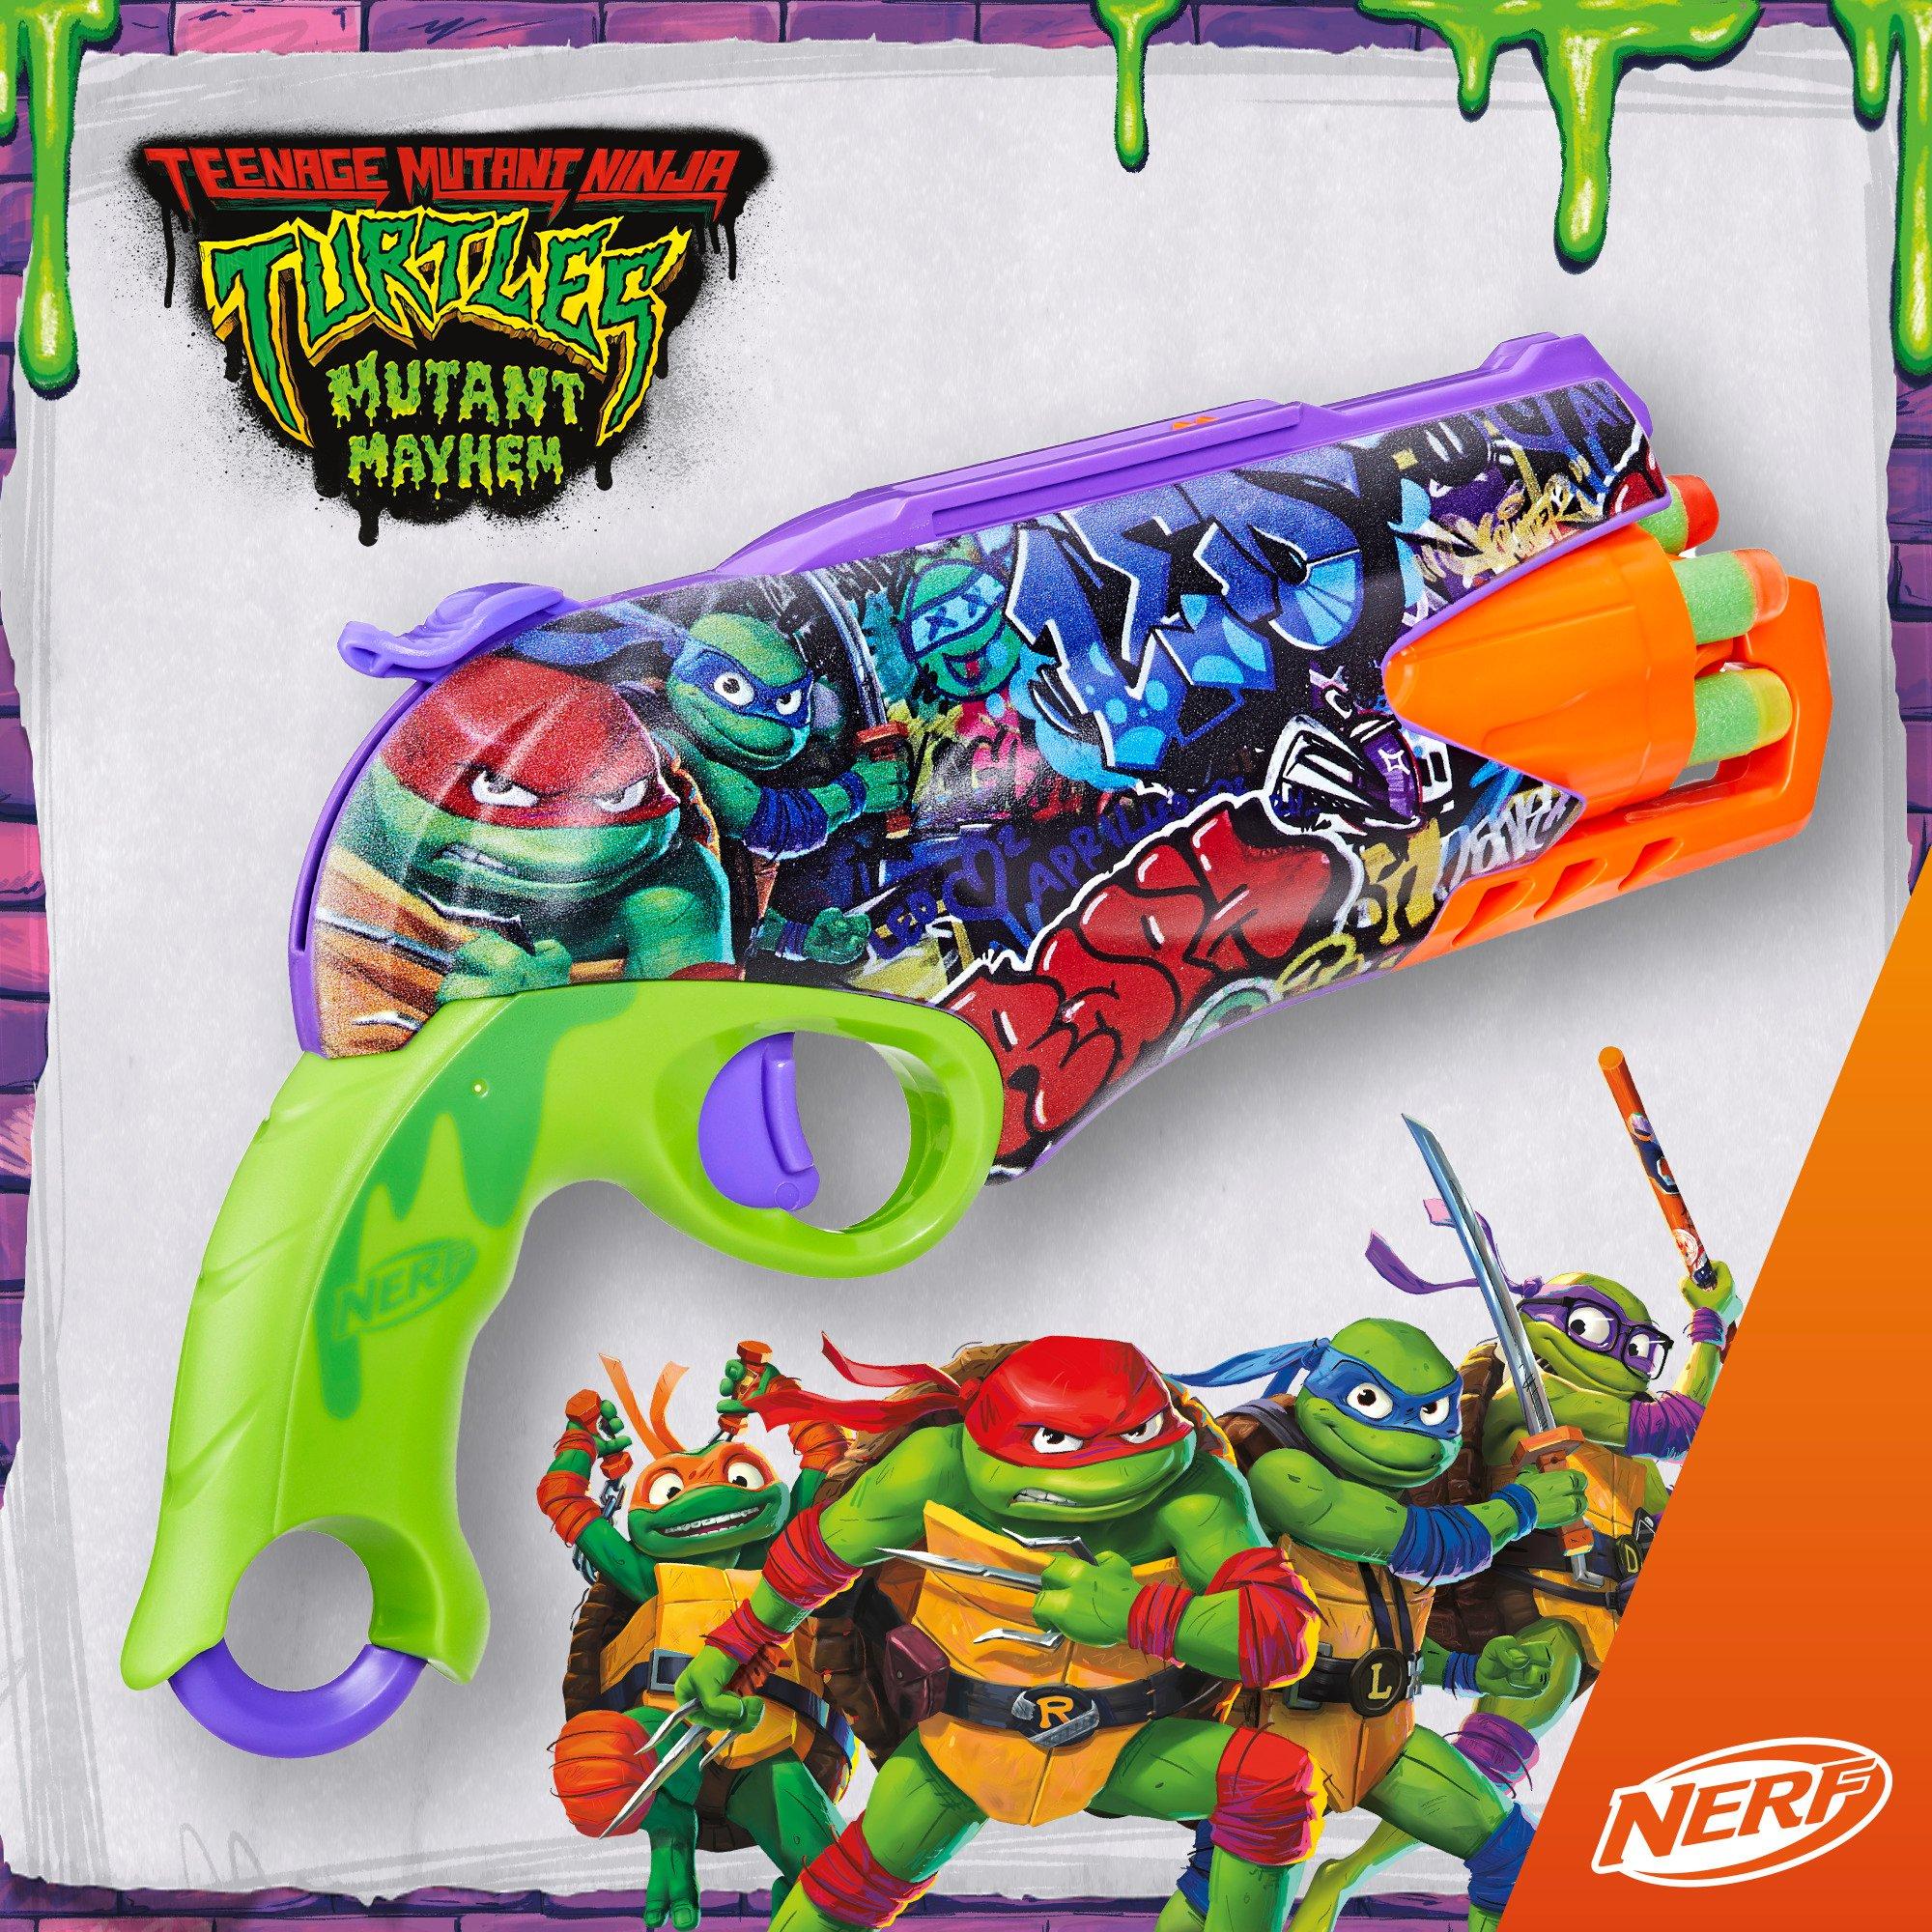 https://media.gamestop.com/i/gamestop/20006127_ALT08/NERF-Teenage-Mutant-Ninja-Turtles-Blaster?$pdp$